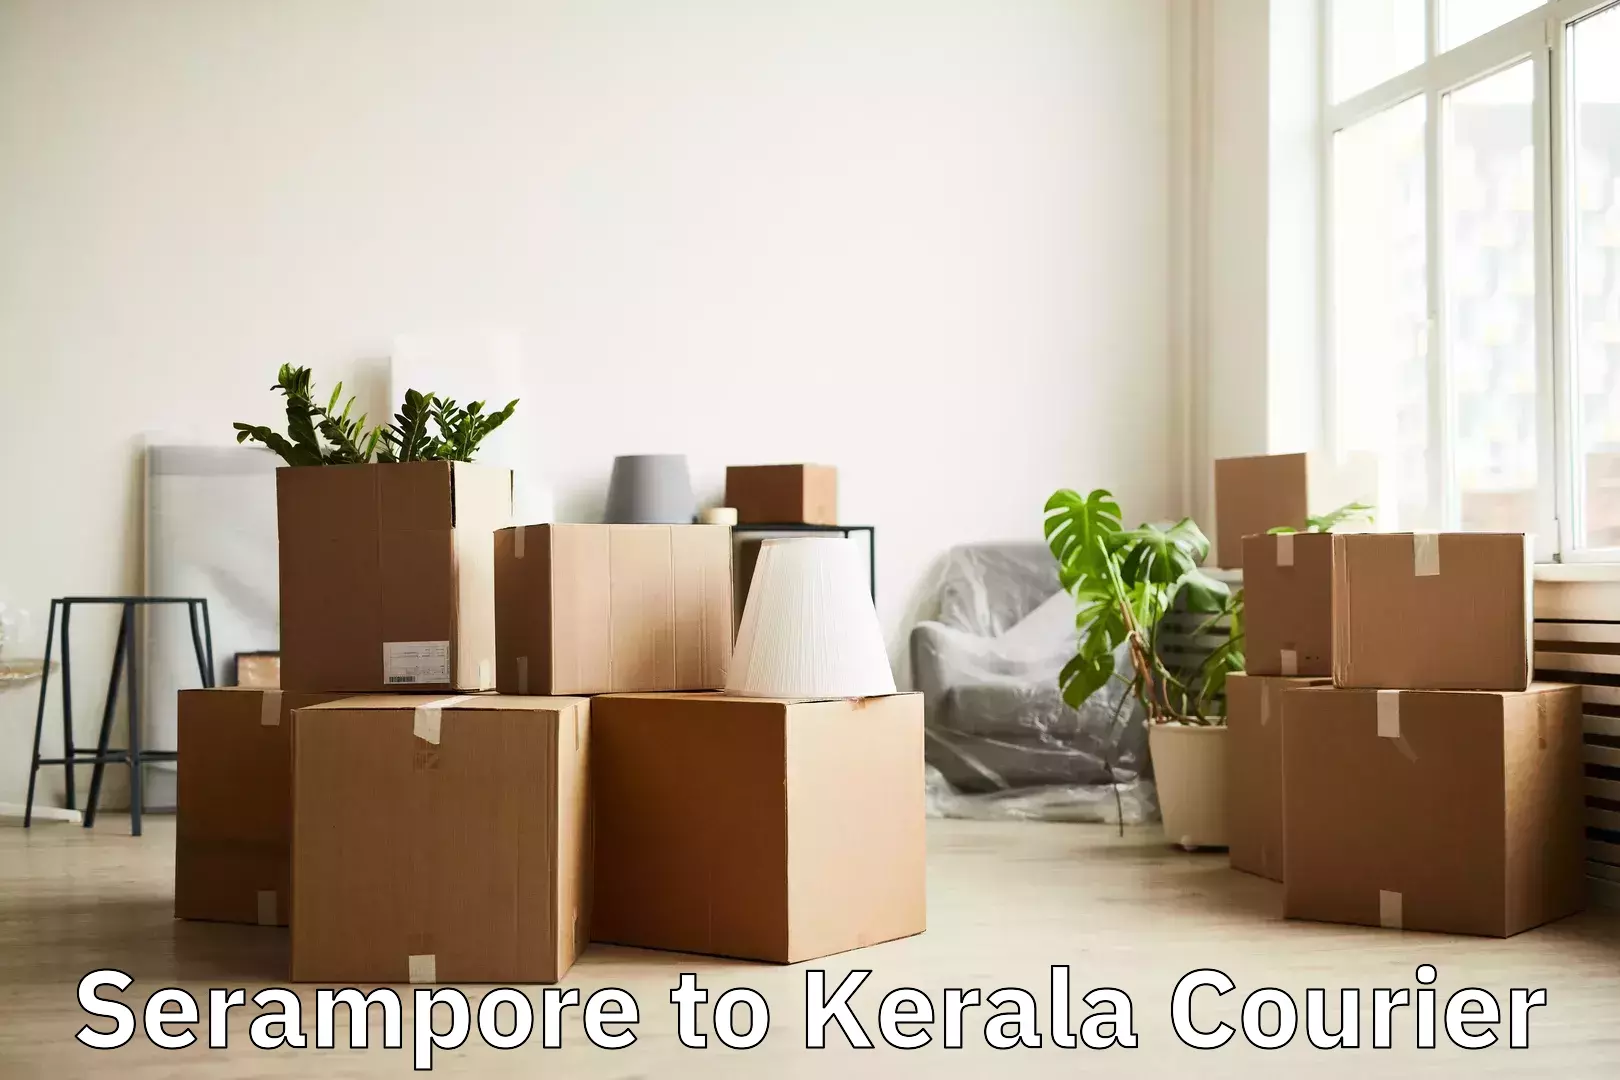 Luggage shipment specialists Serampore to Kazhakkoottam